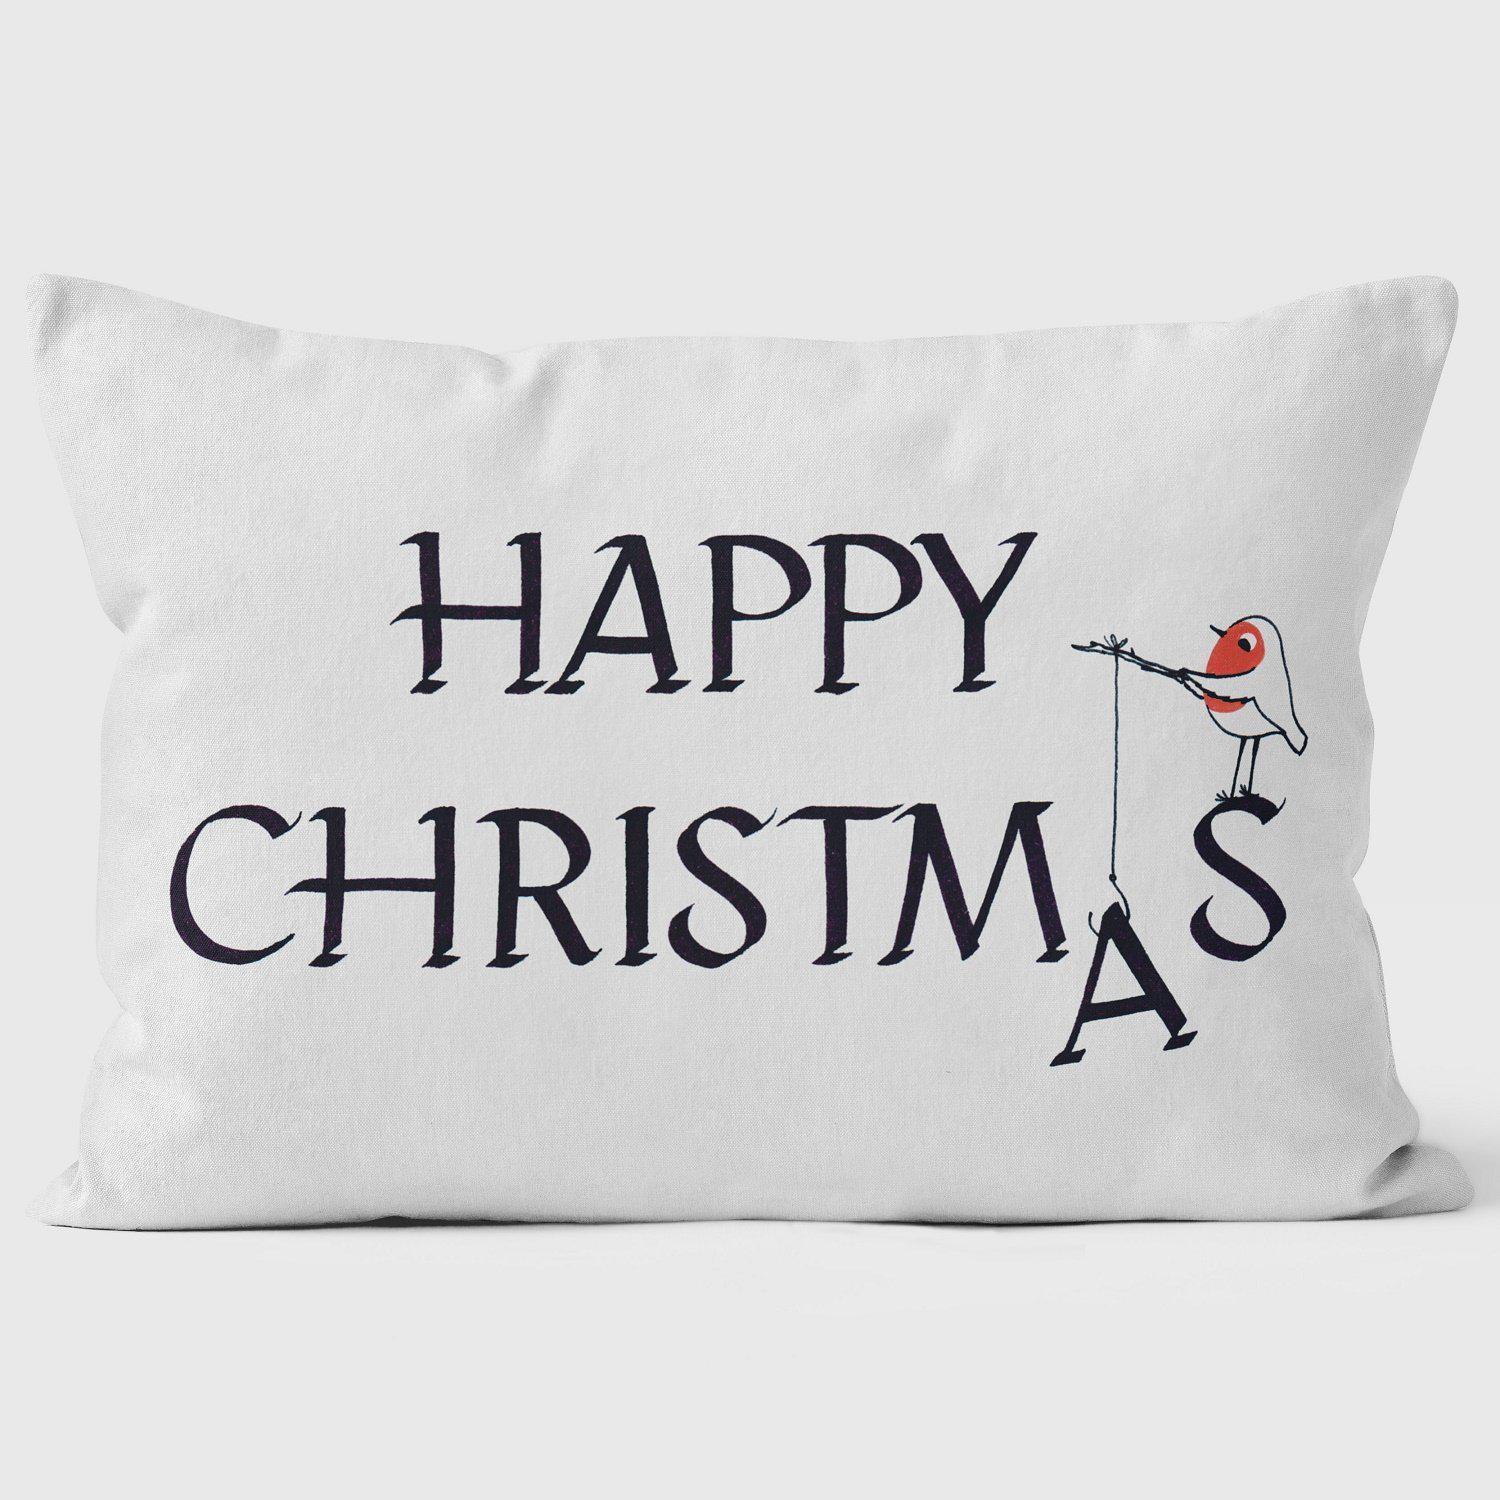 Hooking Up Christmas - Christmas Cushion - Handmade Cushions UK - WeLoveCushions